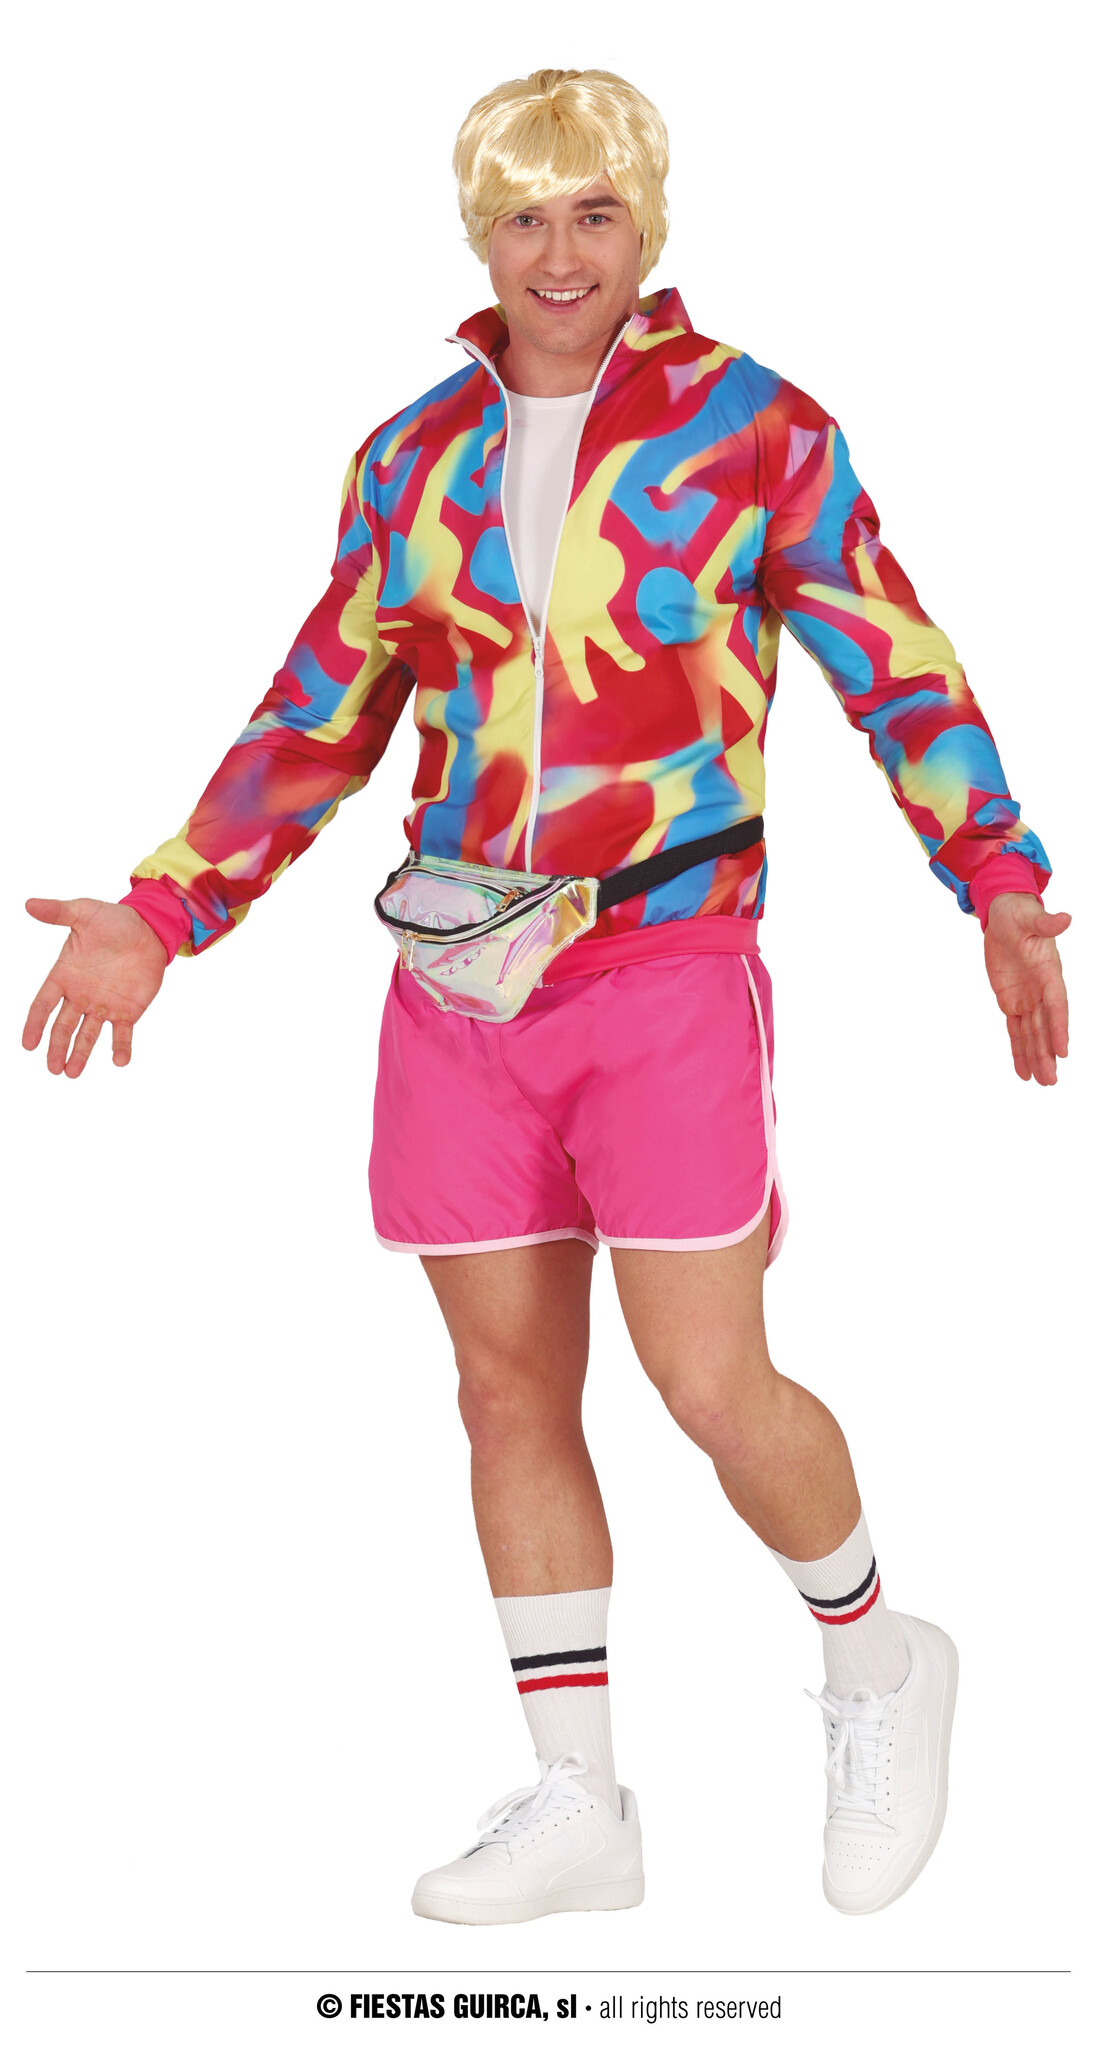 Guirca - Jaren 80 & 90 Kostuum - Miami Ken Roller Skate Beach - Man - Multicolor - Maat 52-54 - Carnavalskleding - Verkleedkleding